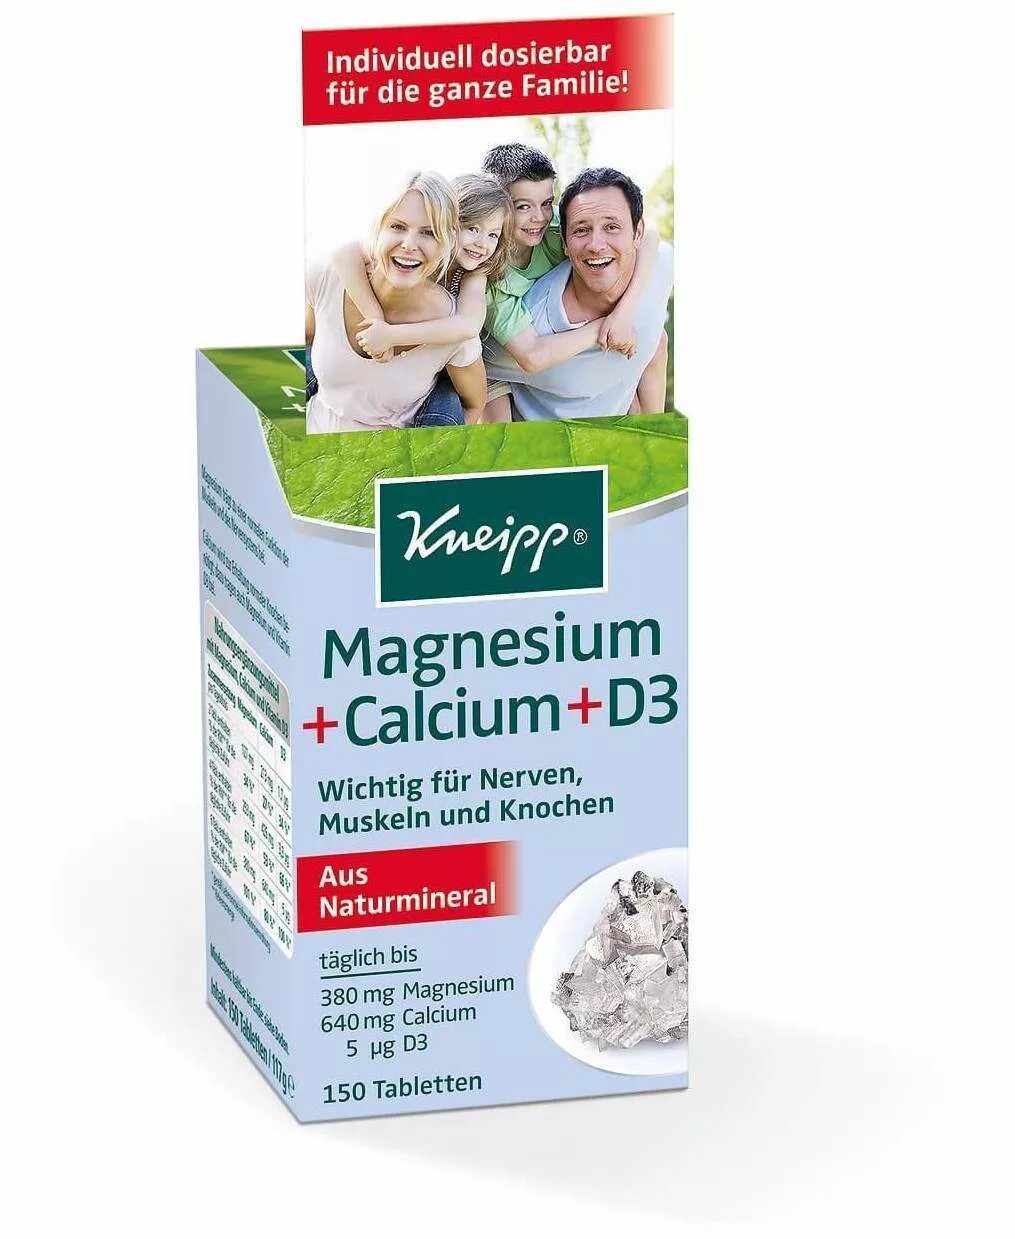 Витамины Kneipp Magnesium Calcium d3. Magnesium Calcium d3 Kneipp. Kneipp магний + кальций + d3 таблетки, 150 шт. Calcium d3 порошок.